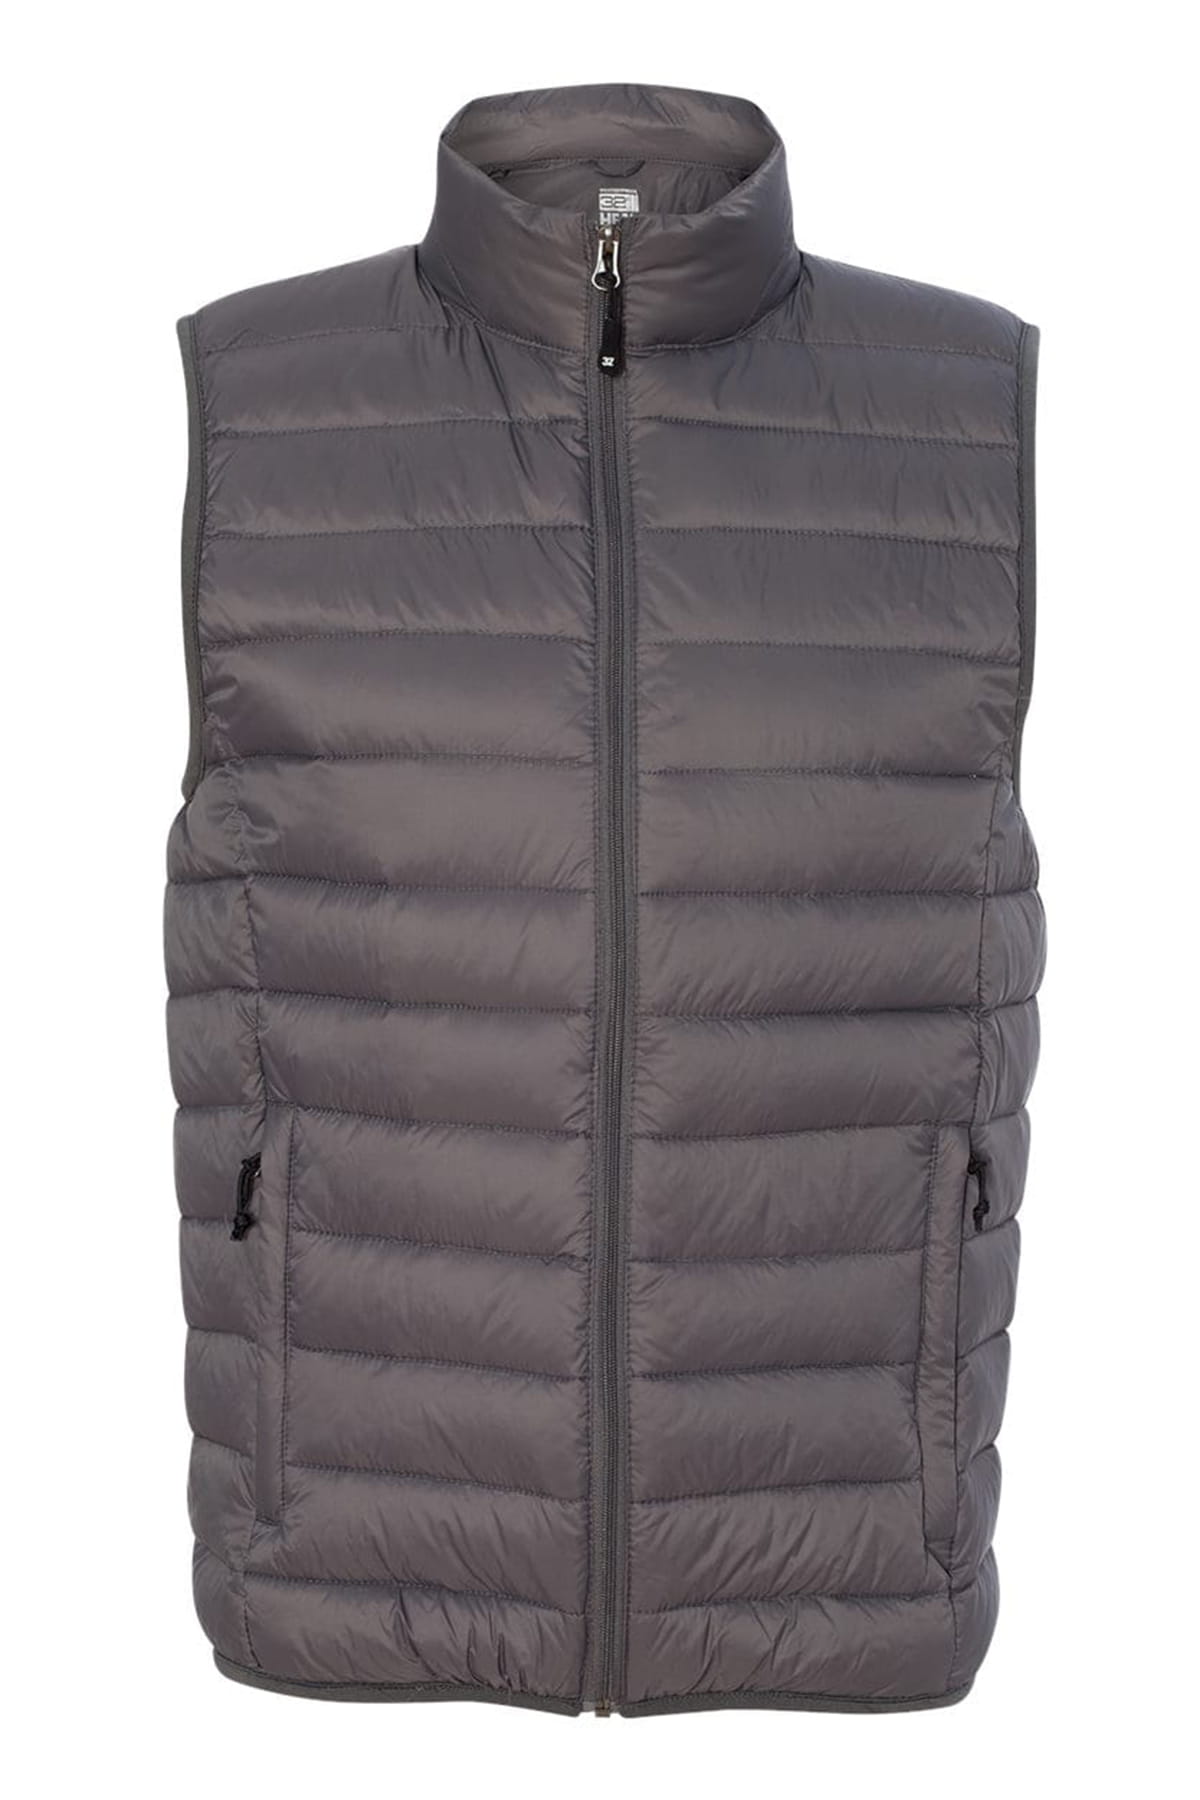 Weatherproof – 32 Degrees Packable Down Vest – THE DUCKHORN SHOP